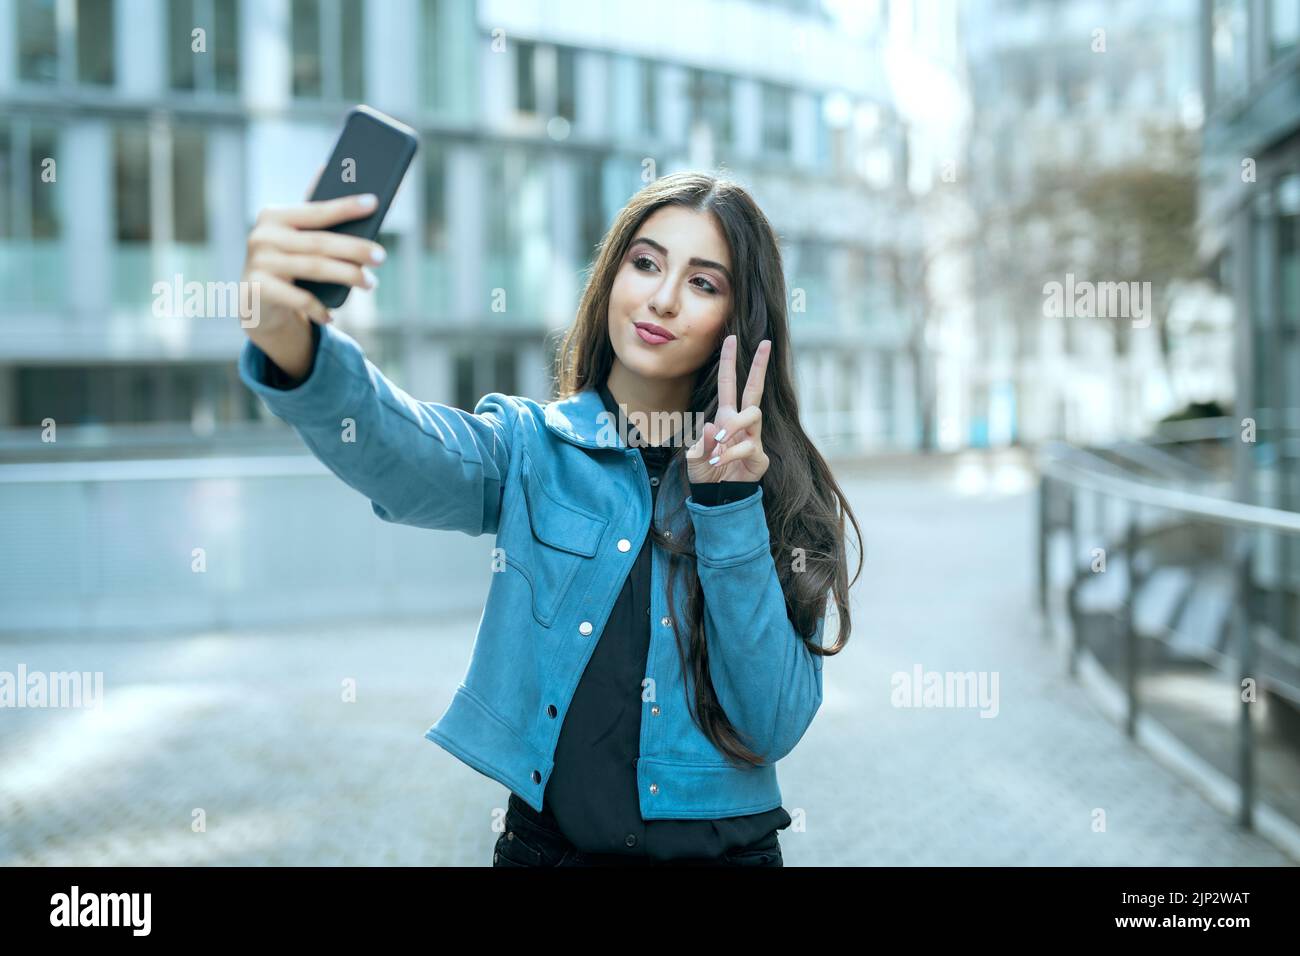 Young Muslim Woman Posing Taking Selfie Photo Stock Image - Image of female,  hijab: 50932027